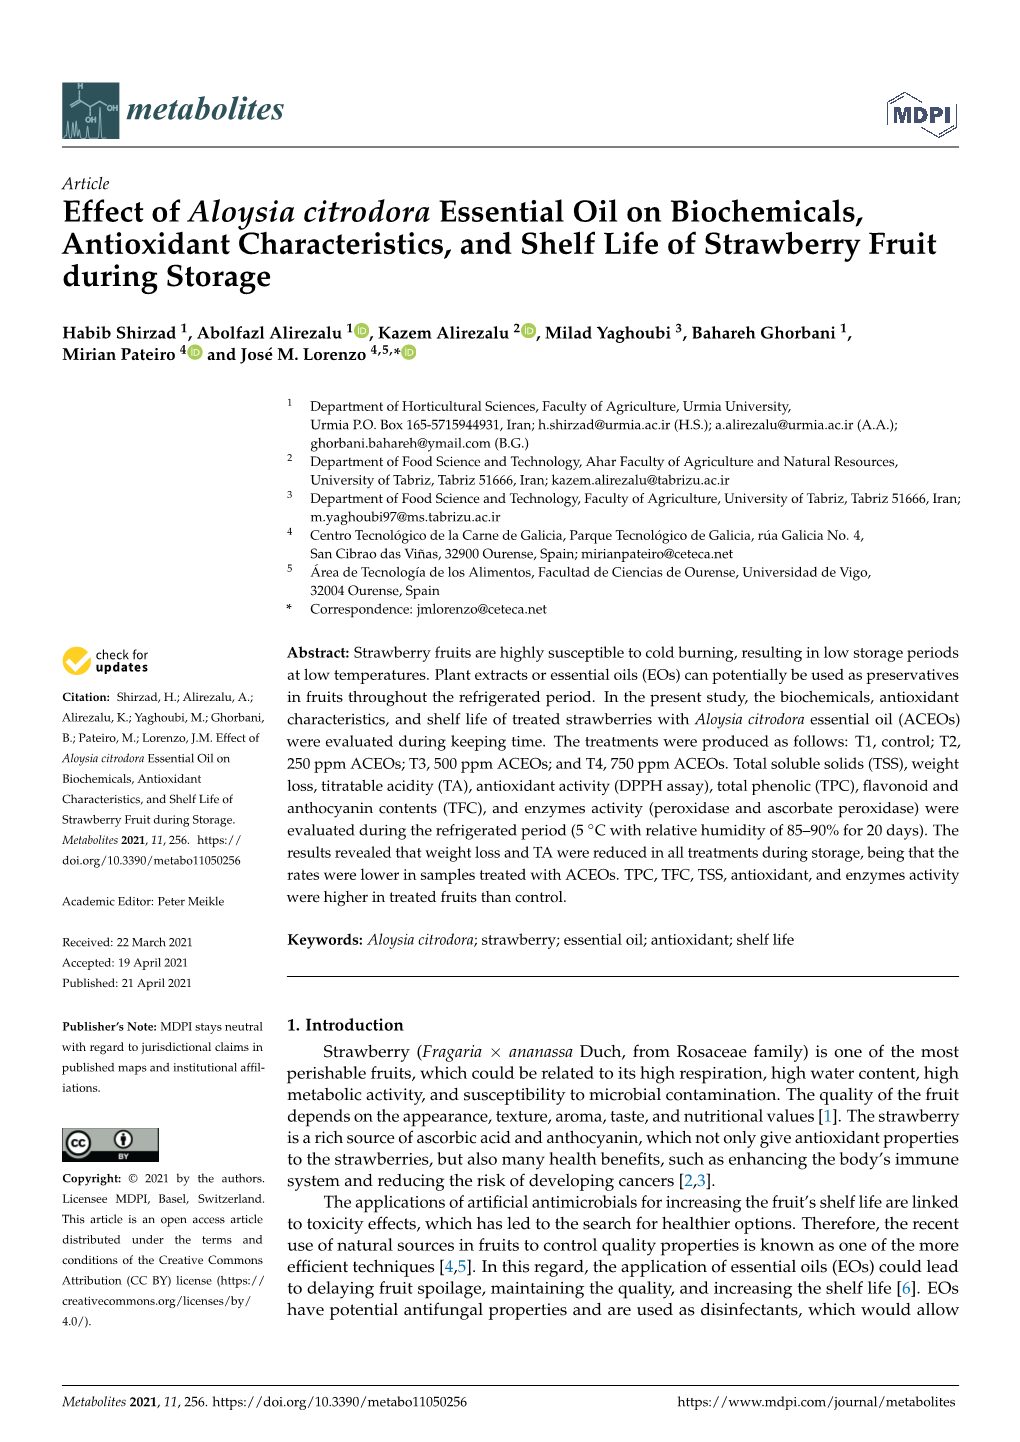 Effect of Aloysia Citrodora Essential Oil on Biochemicals, Antioxidant Characteristics, and Shelf Life of Strawberry Fruit During Storage